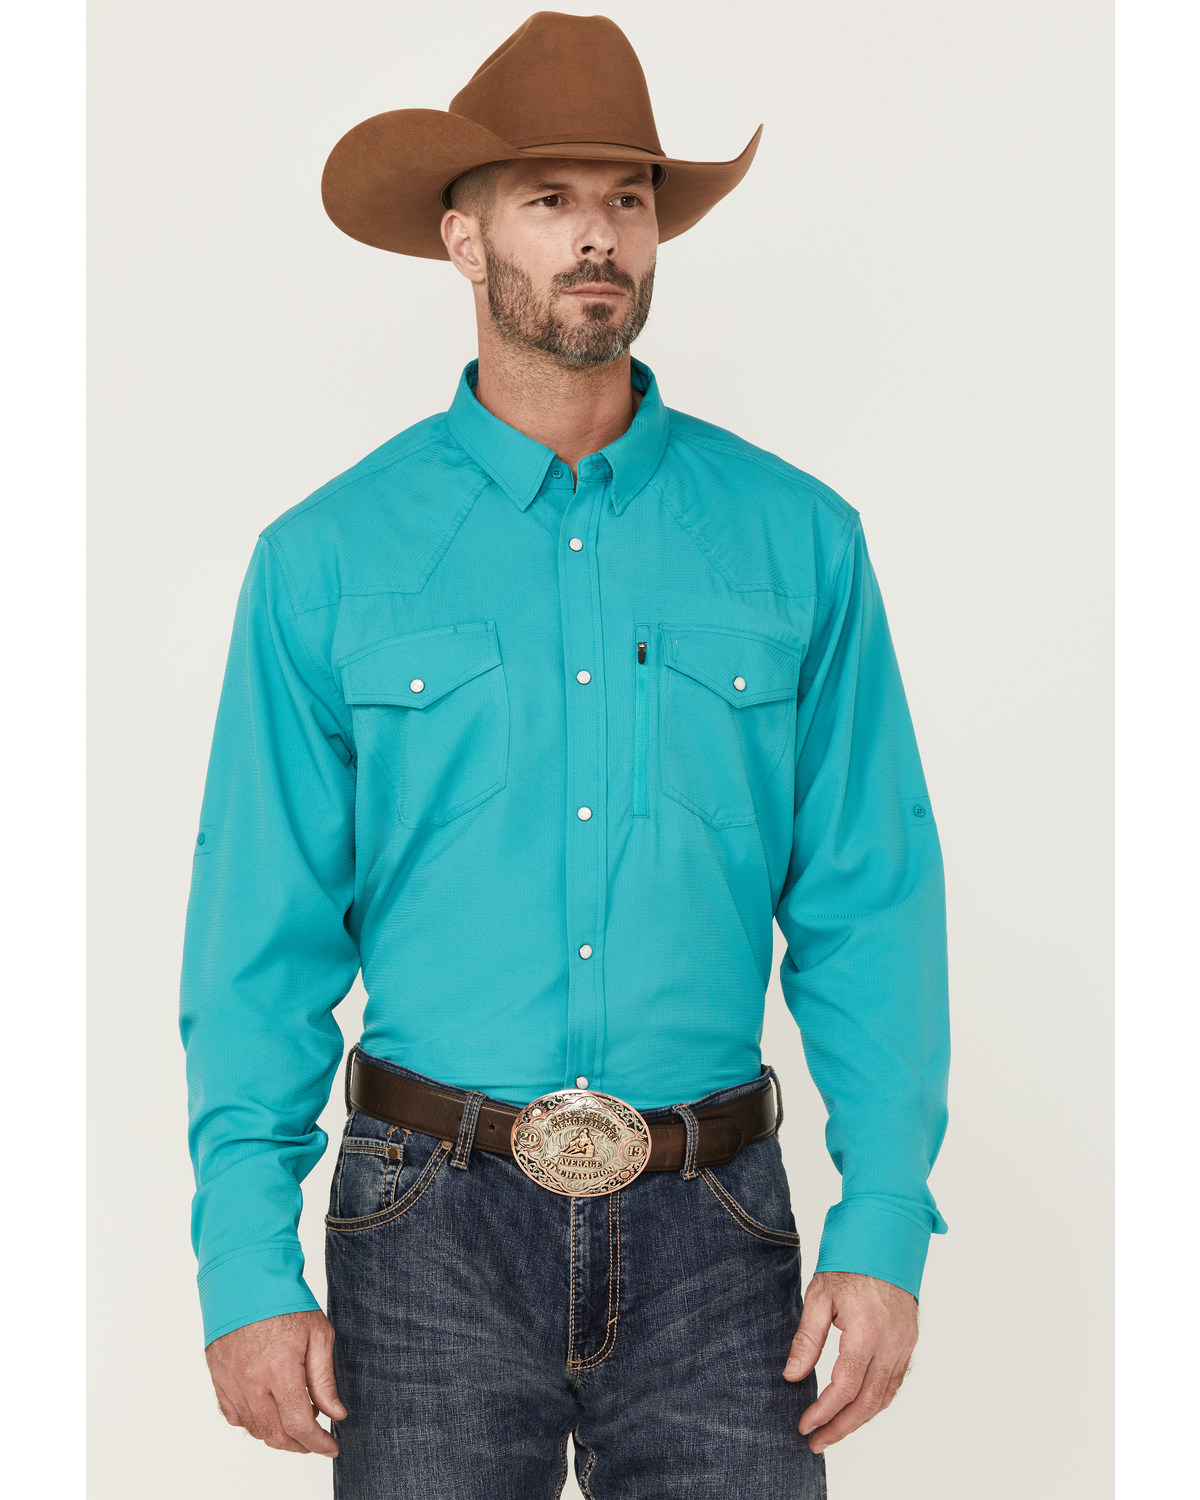 RANK 45® Men's Roughie Tech Long Sleeve Pearl Snap Western Shirt